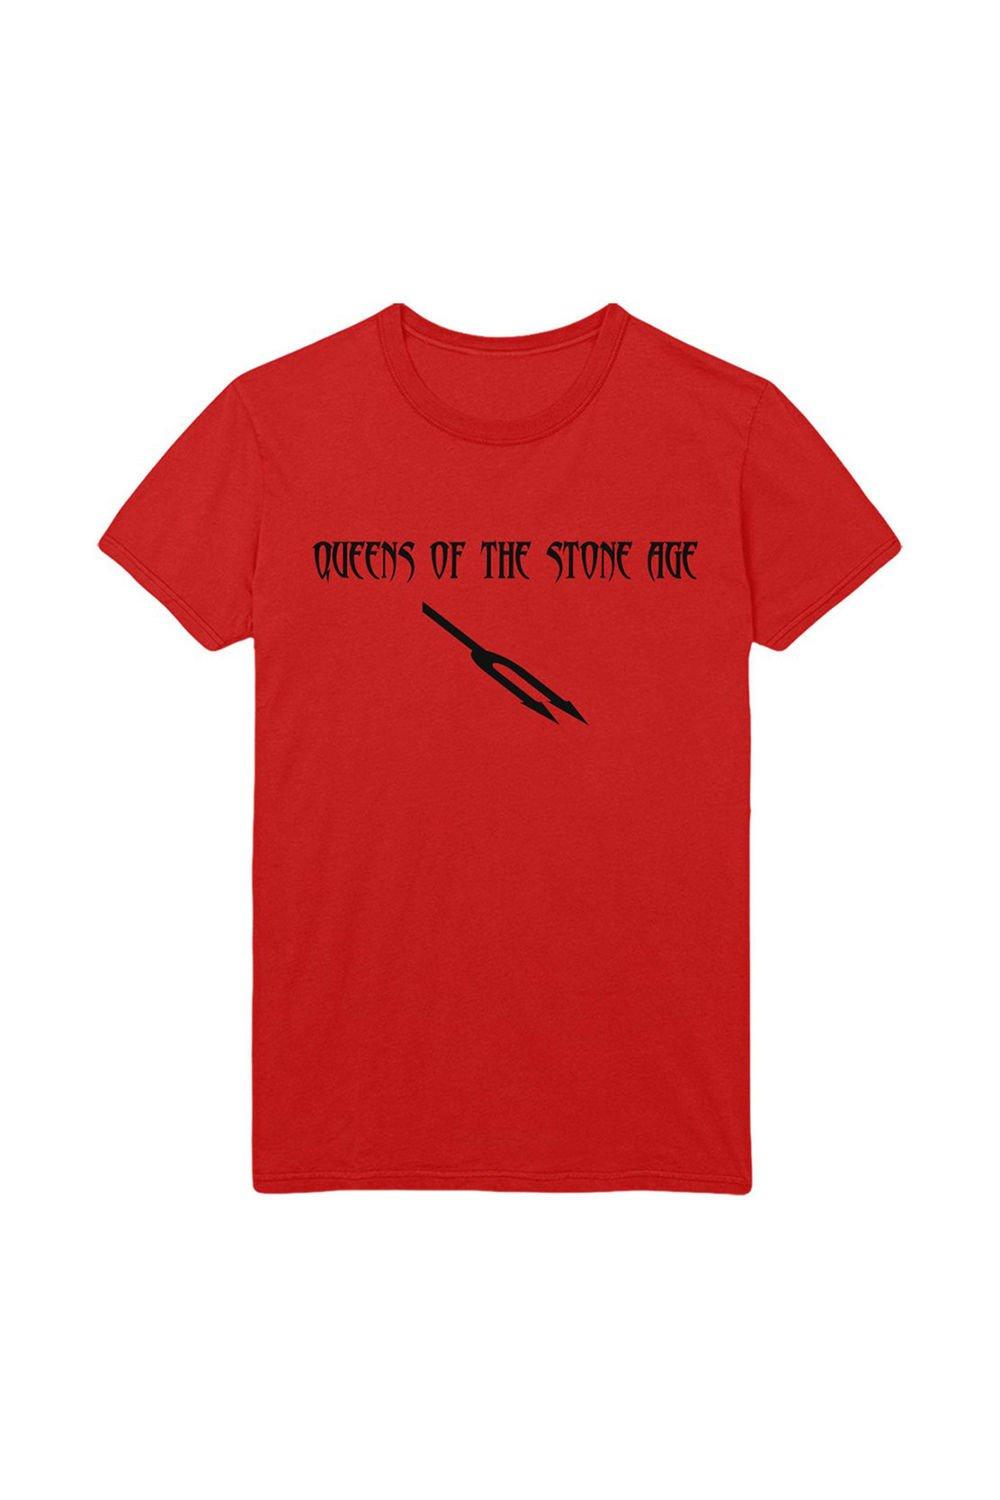 Хлопковая футболка Deaf Songs Queens Of The Stone Age, красный футболка design heroes queens of the stone age женская черная s